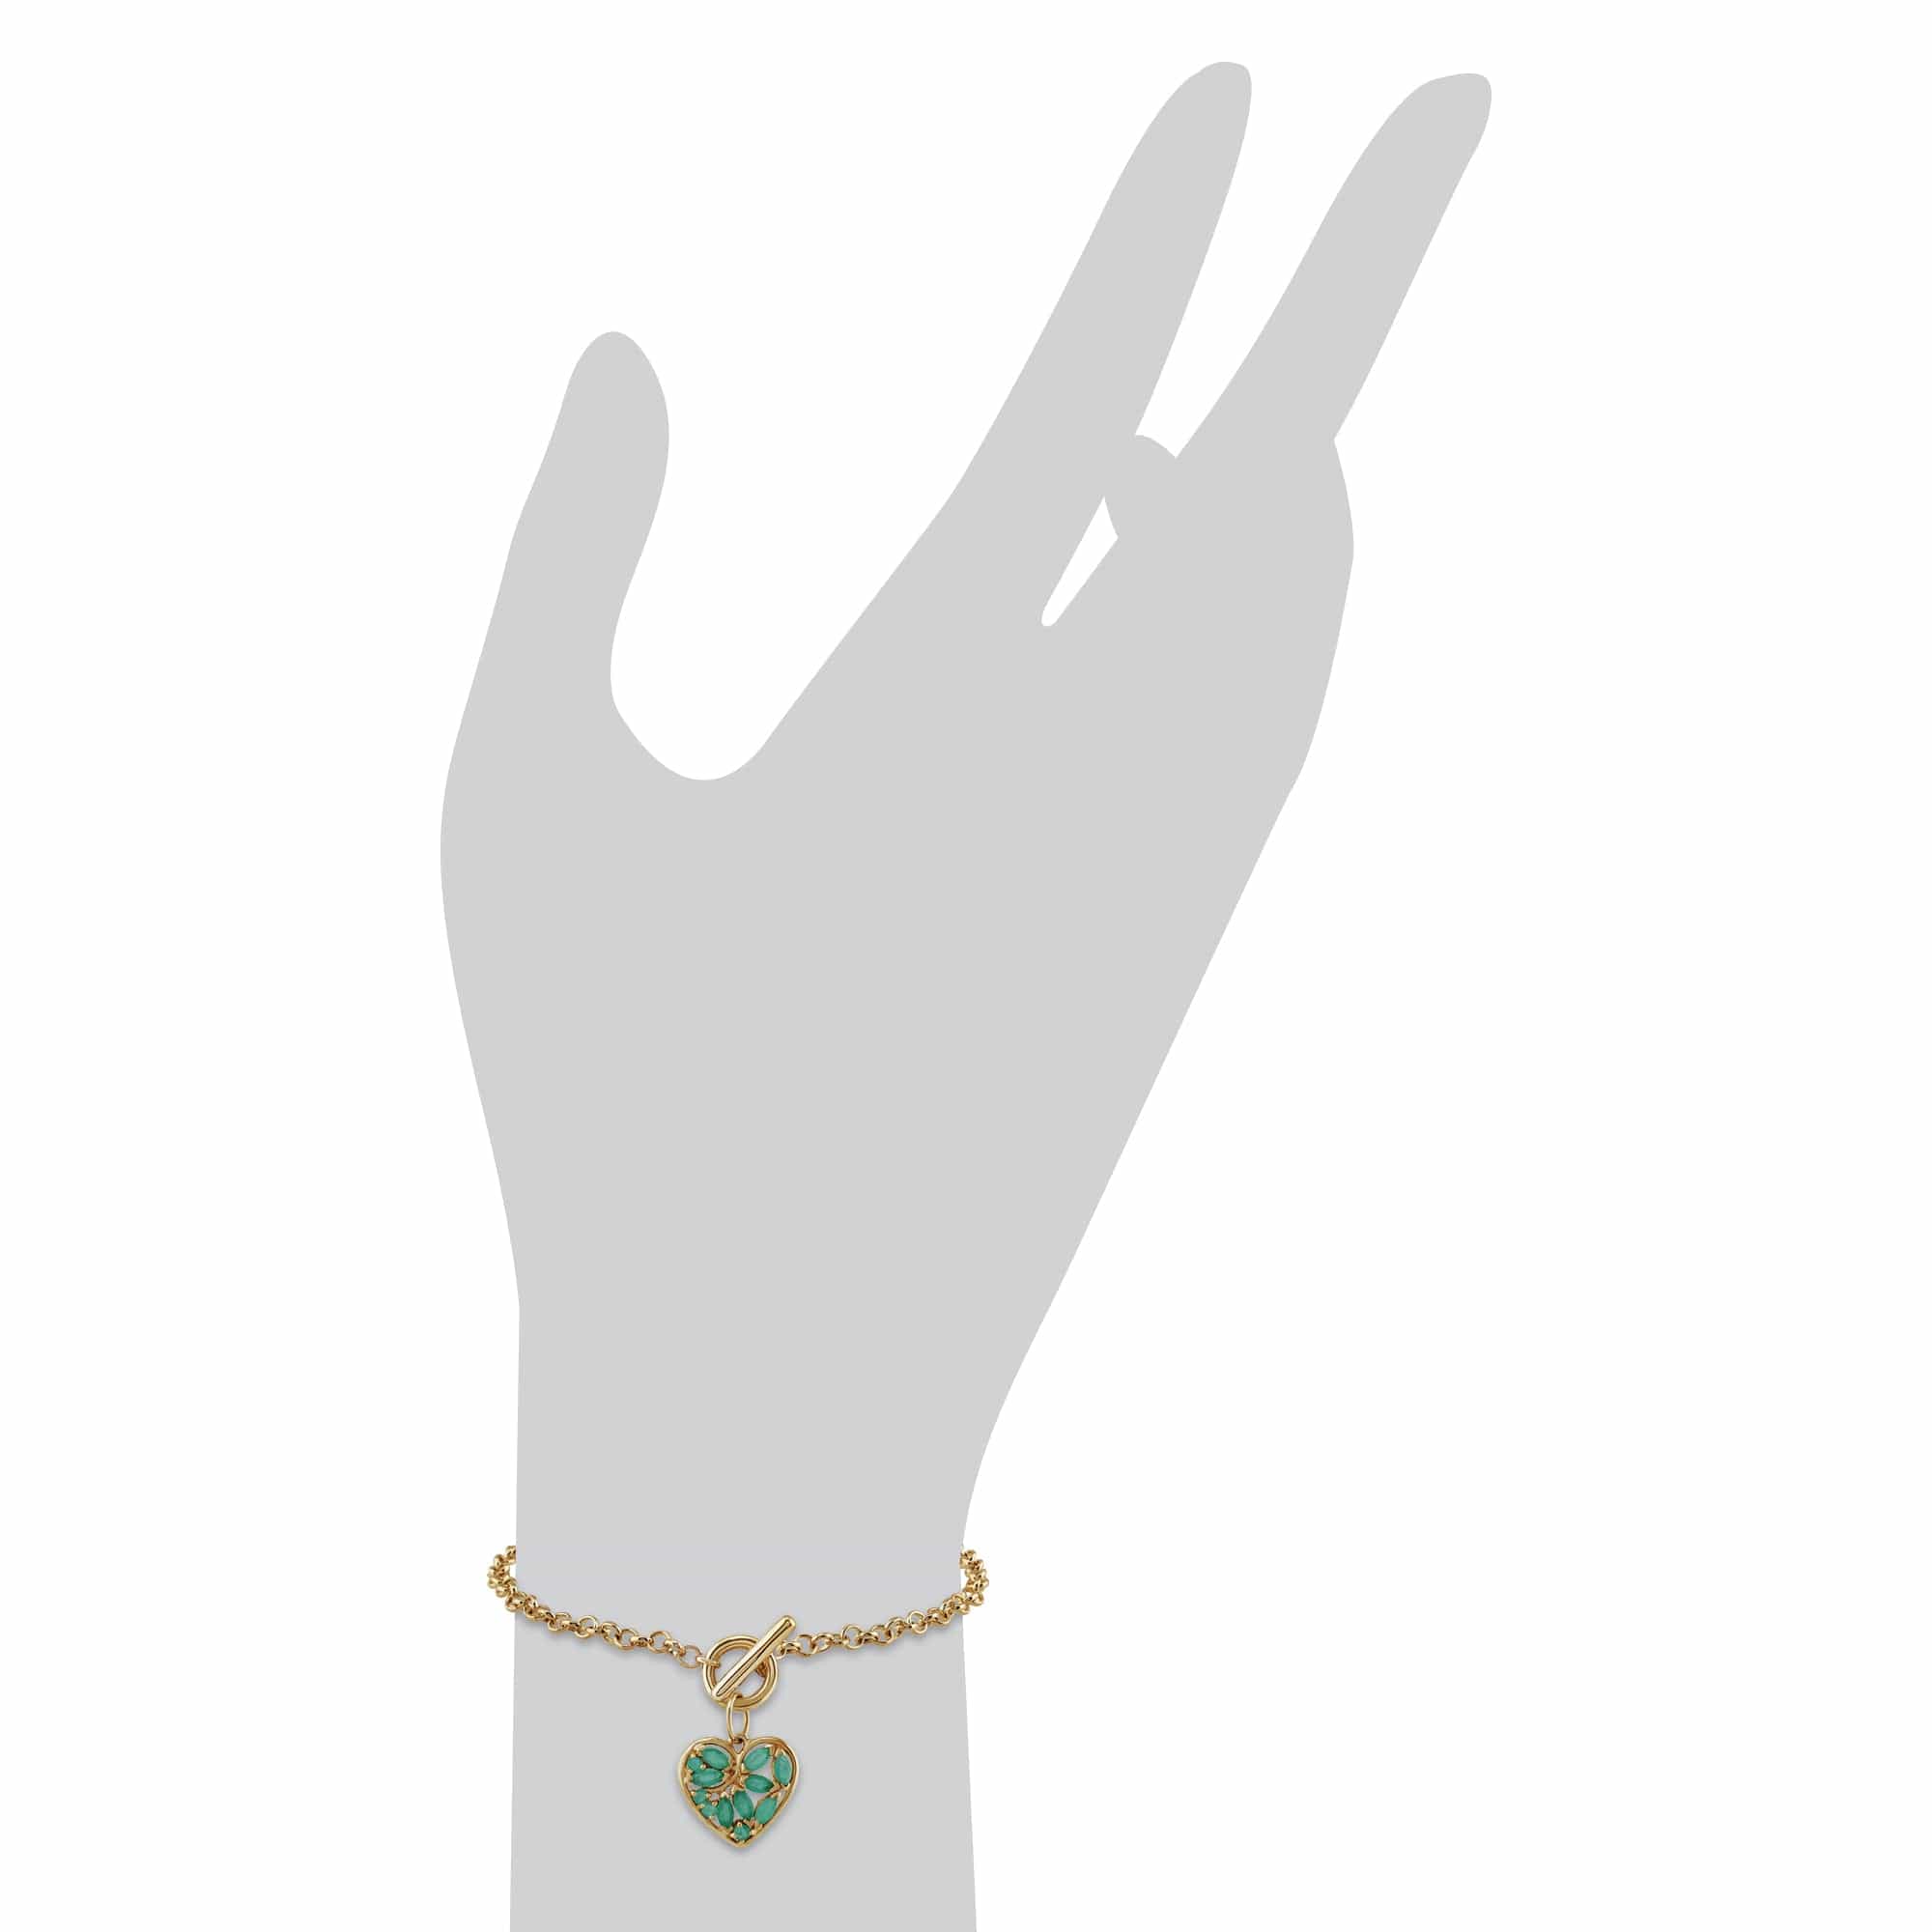 Classic Marquise Emerald Charm Bracelet in 9ct Yellow Gold - Gemondo